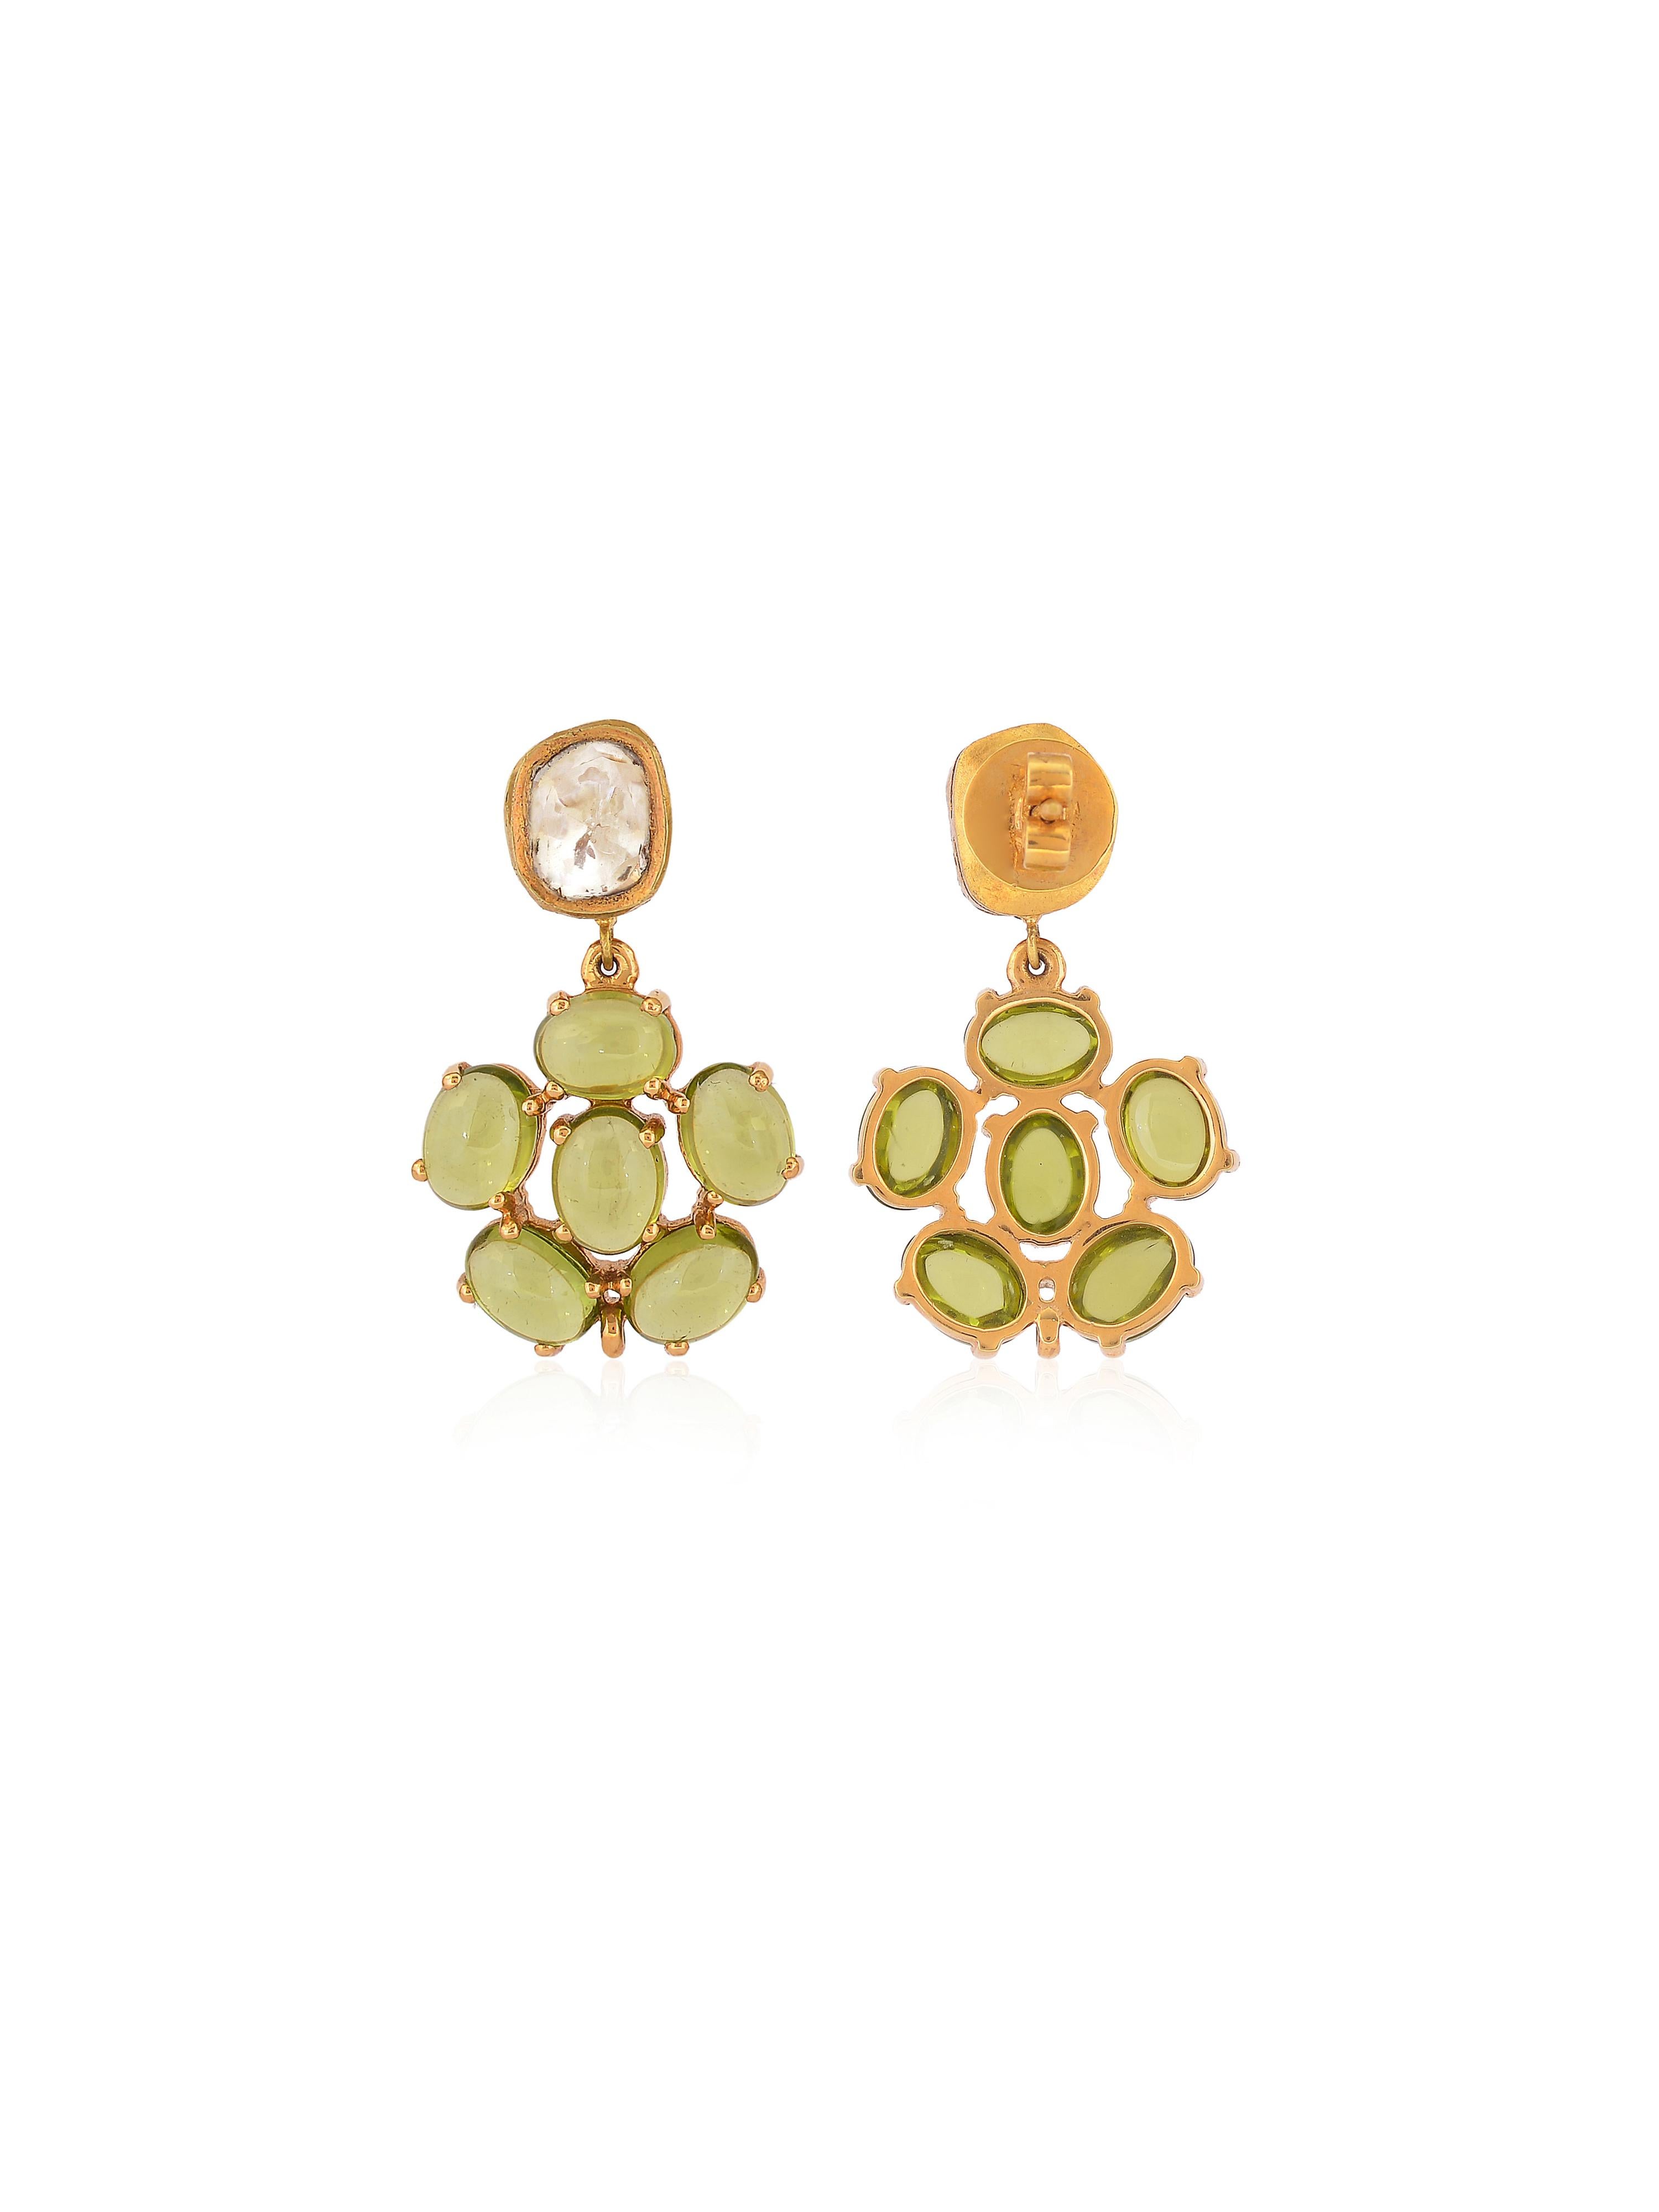 Uncut Diamond and Peridot cabochon dangling earrings handmade in 18K Gold For Sale